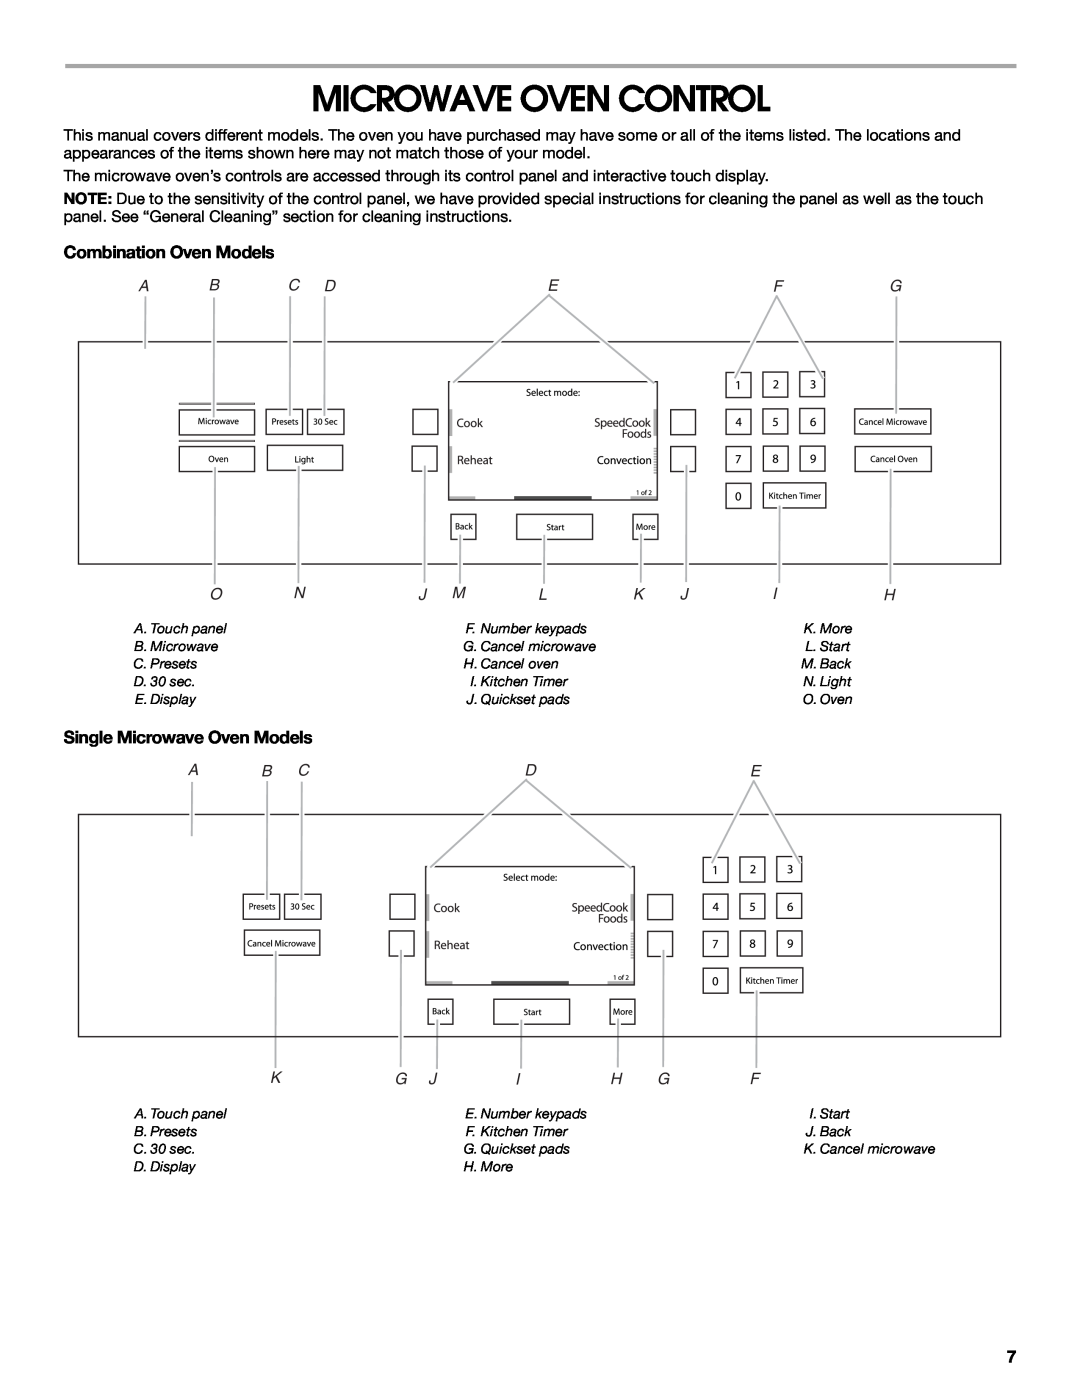 Jenn-Air JMW2327 manual Microwave Oven Control, Combination Oven Models, Single Microwave Oven Models, A B C Defg, A B Cde 